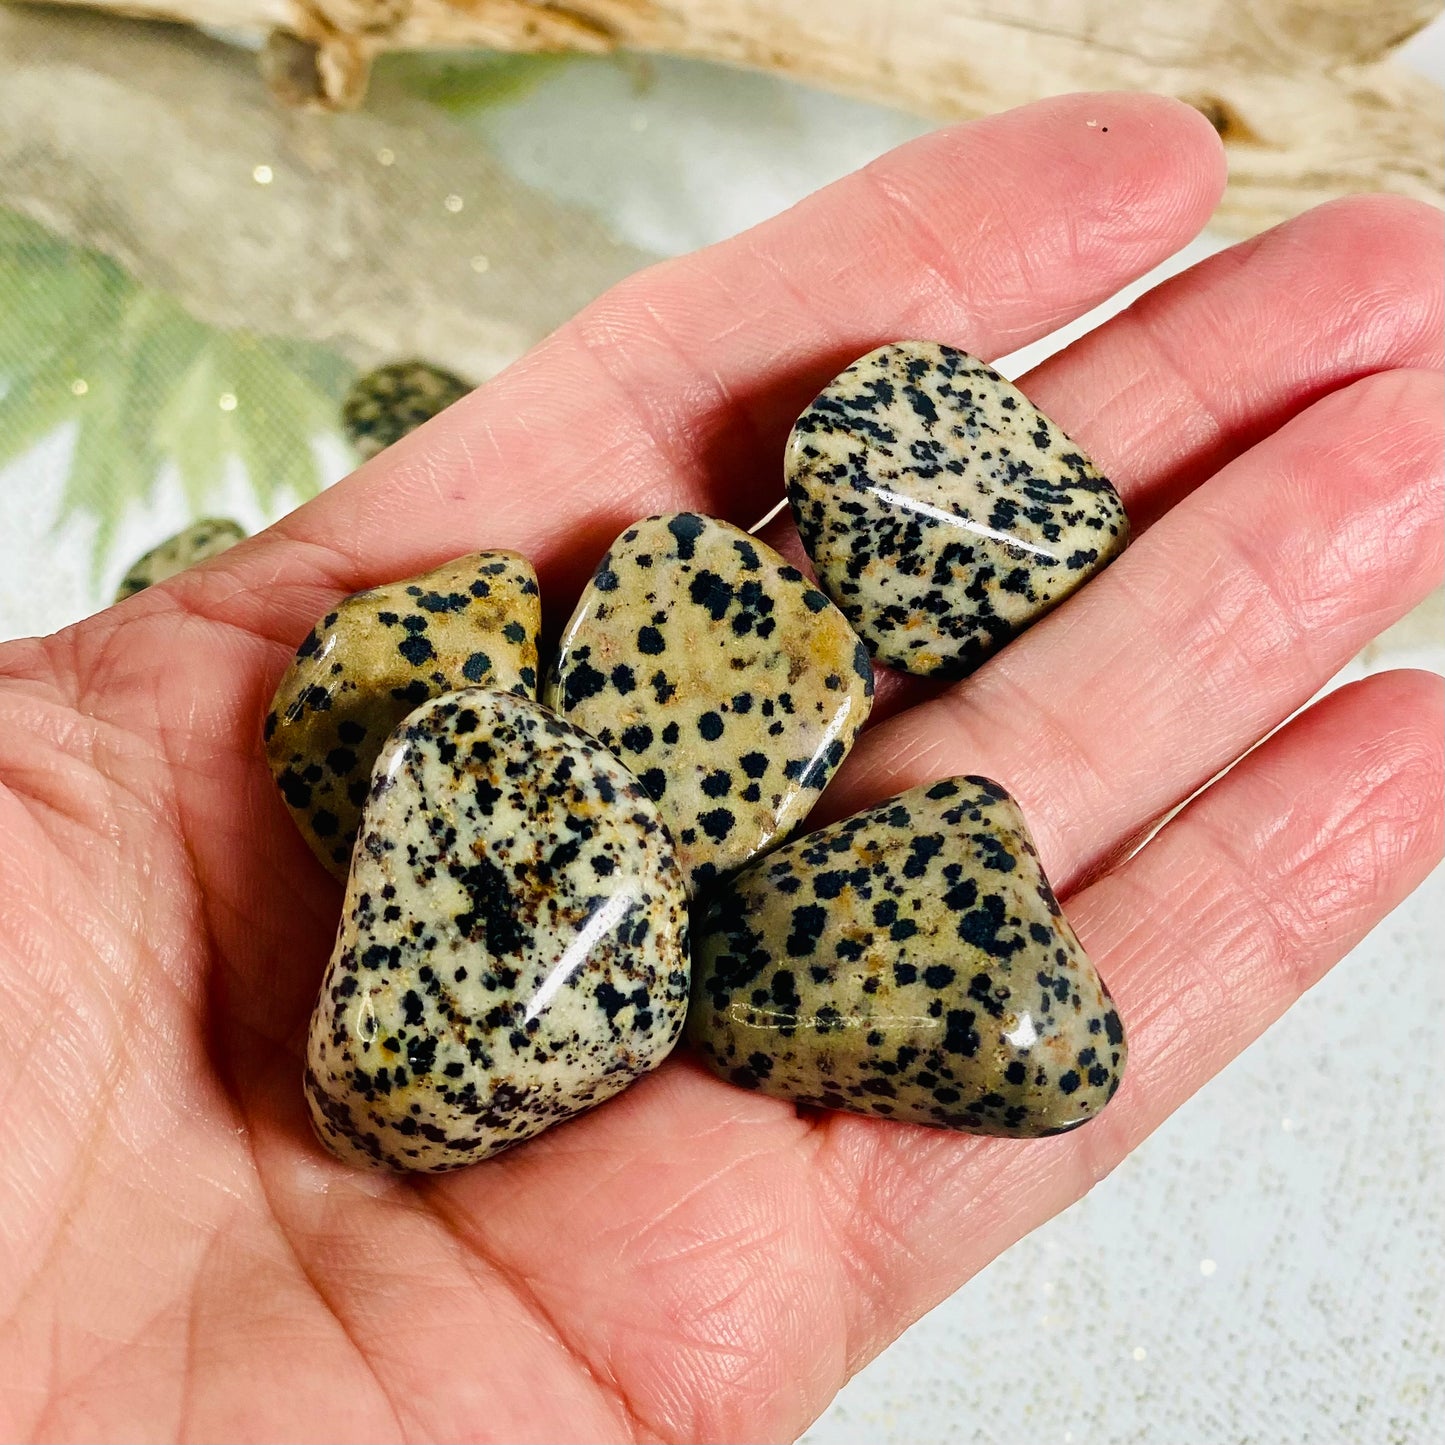 Dalmatian Jasper Tumbled Stone - Natural Beauty for Grounding and Joy